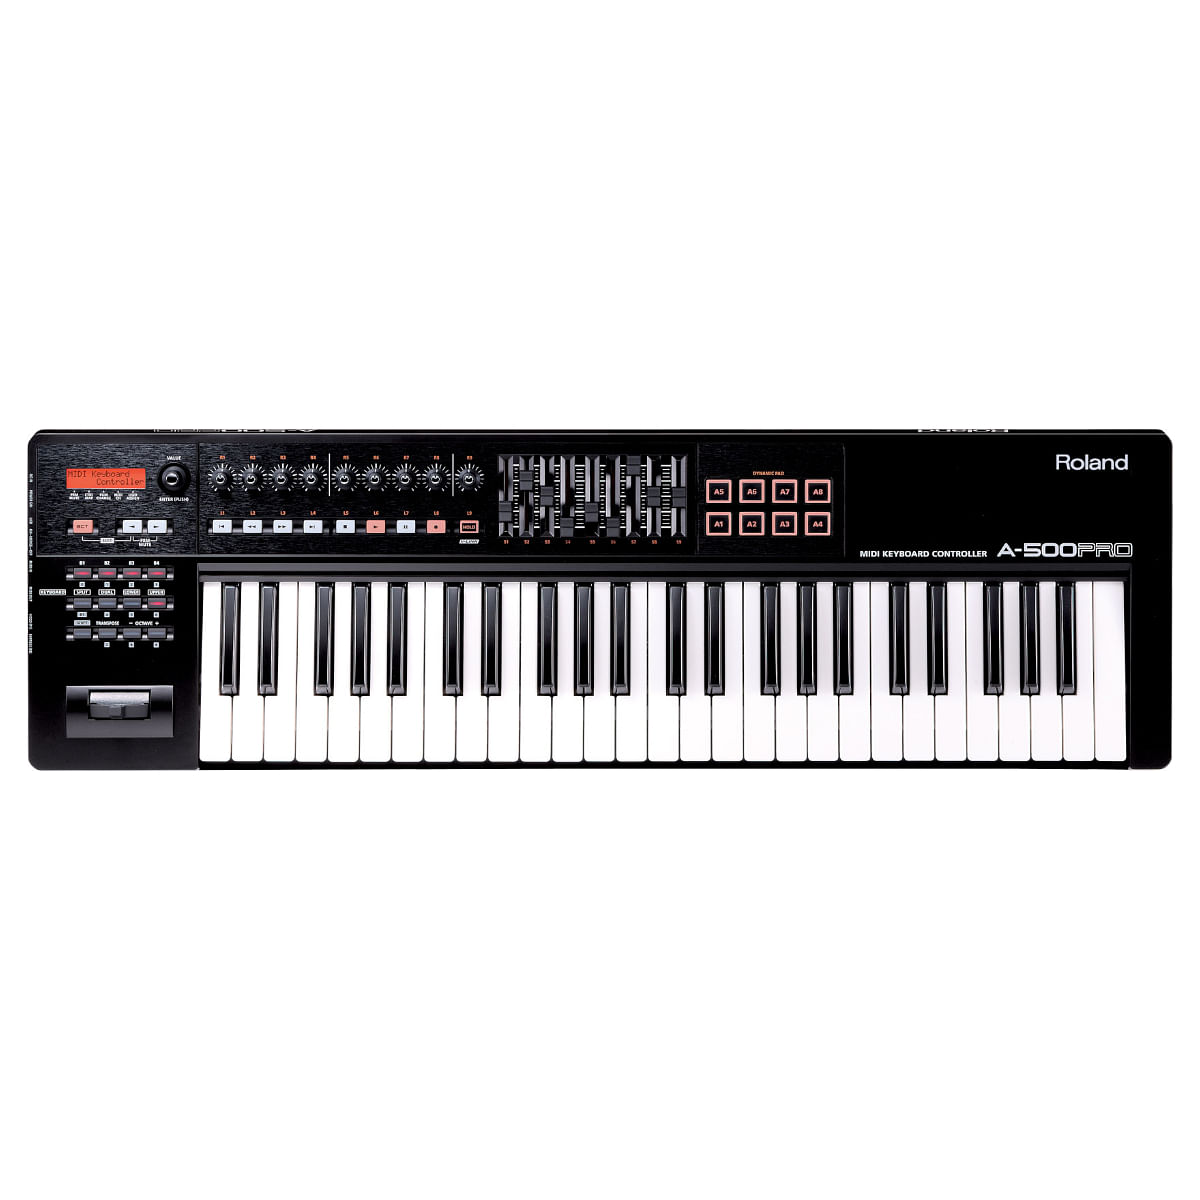 Roland, MIDI Keyboard Controller A-500 PRO